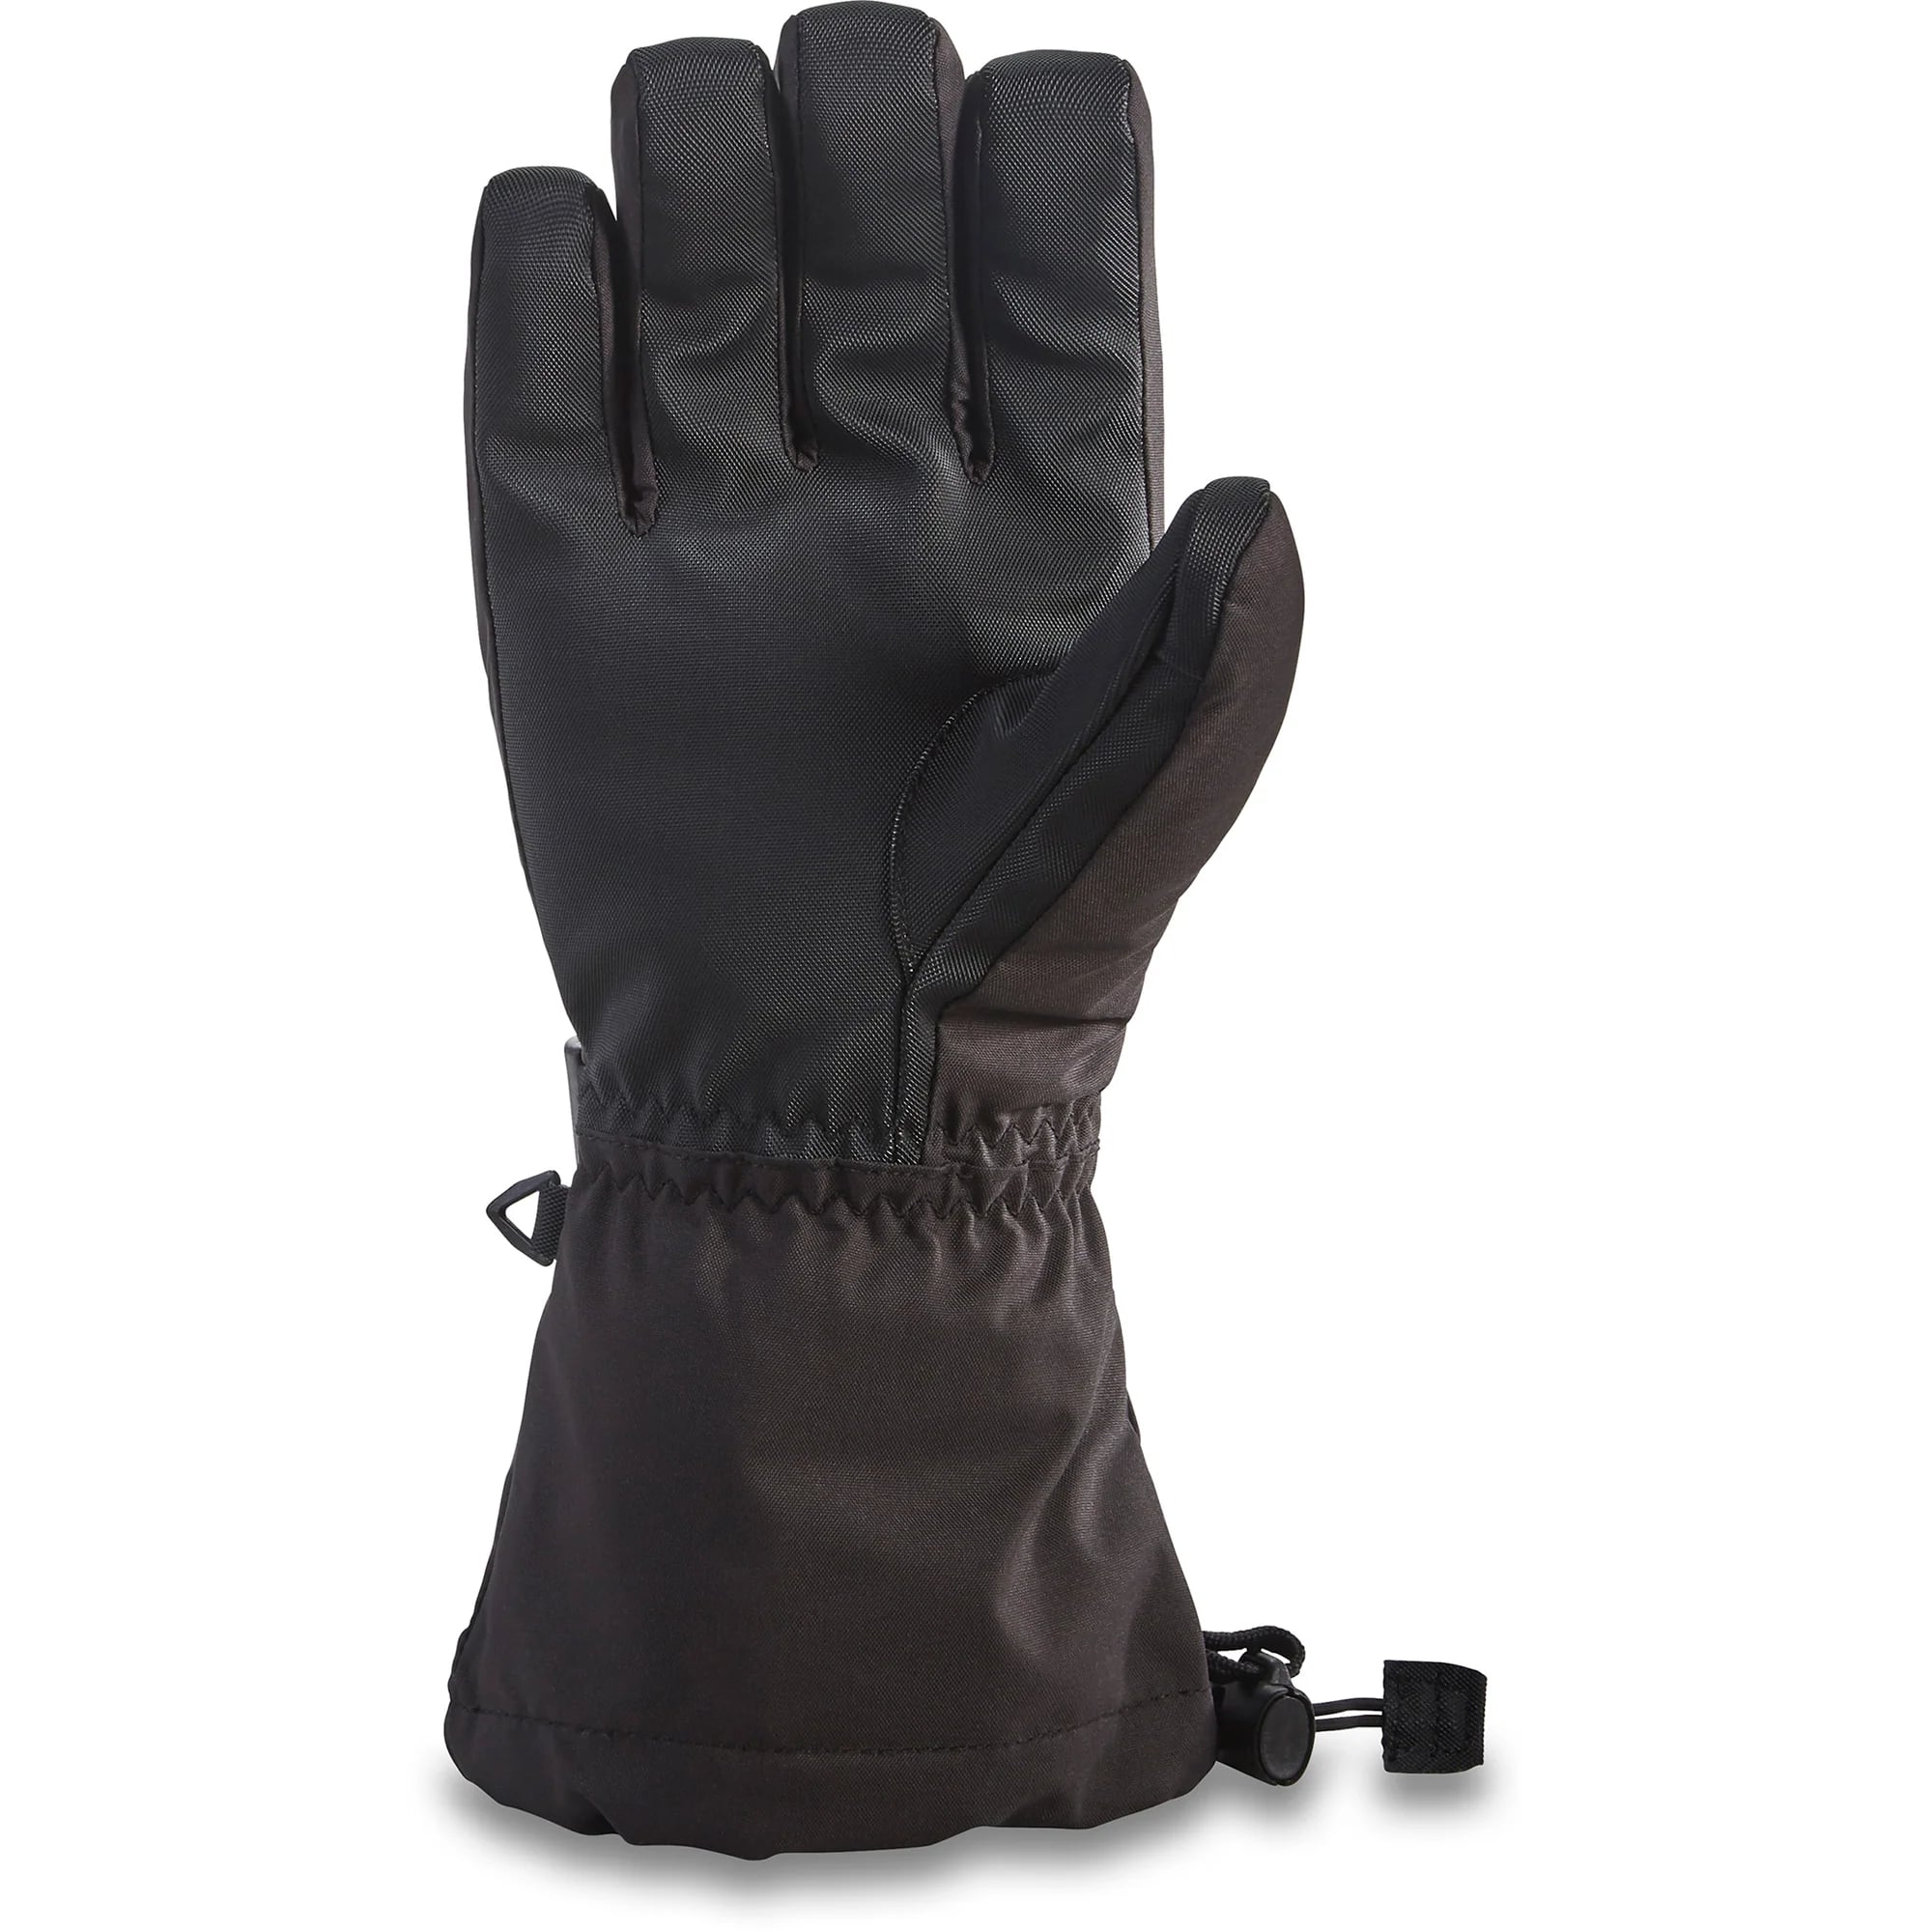 DaKine Womens Lynx Glove